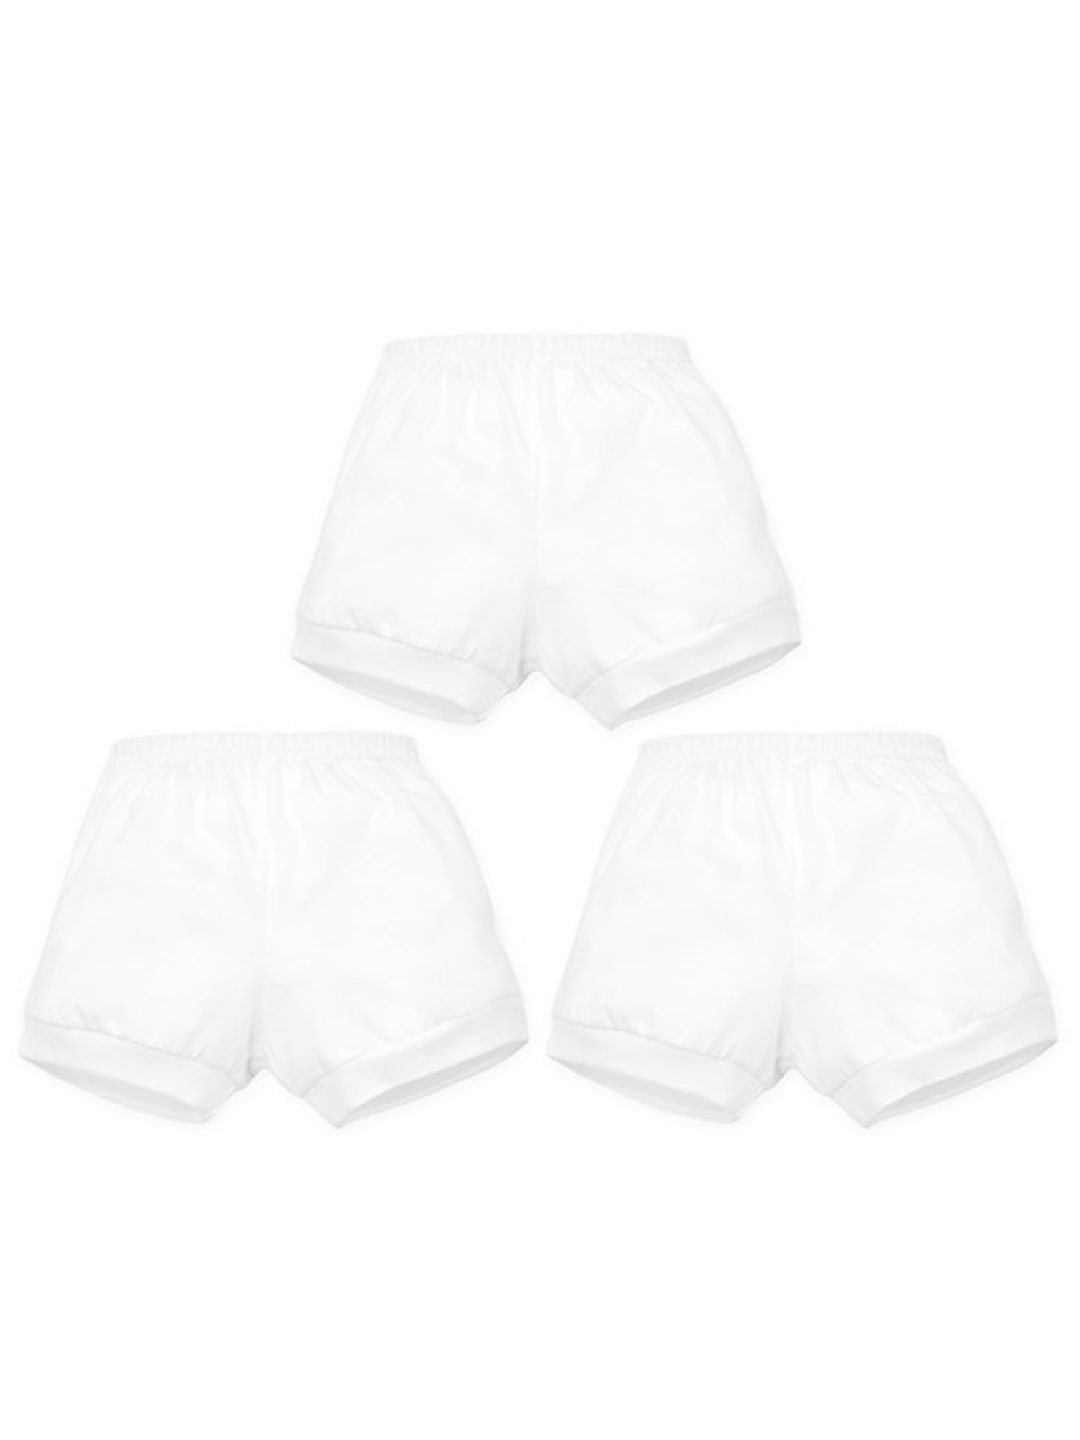 Cotton Stuff Diaper Shorts (3 pcs)